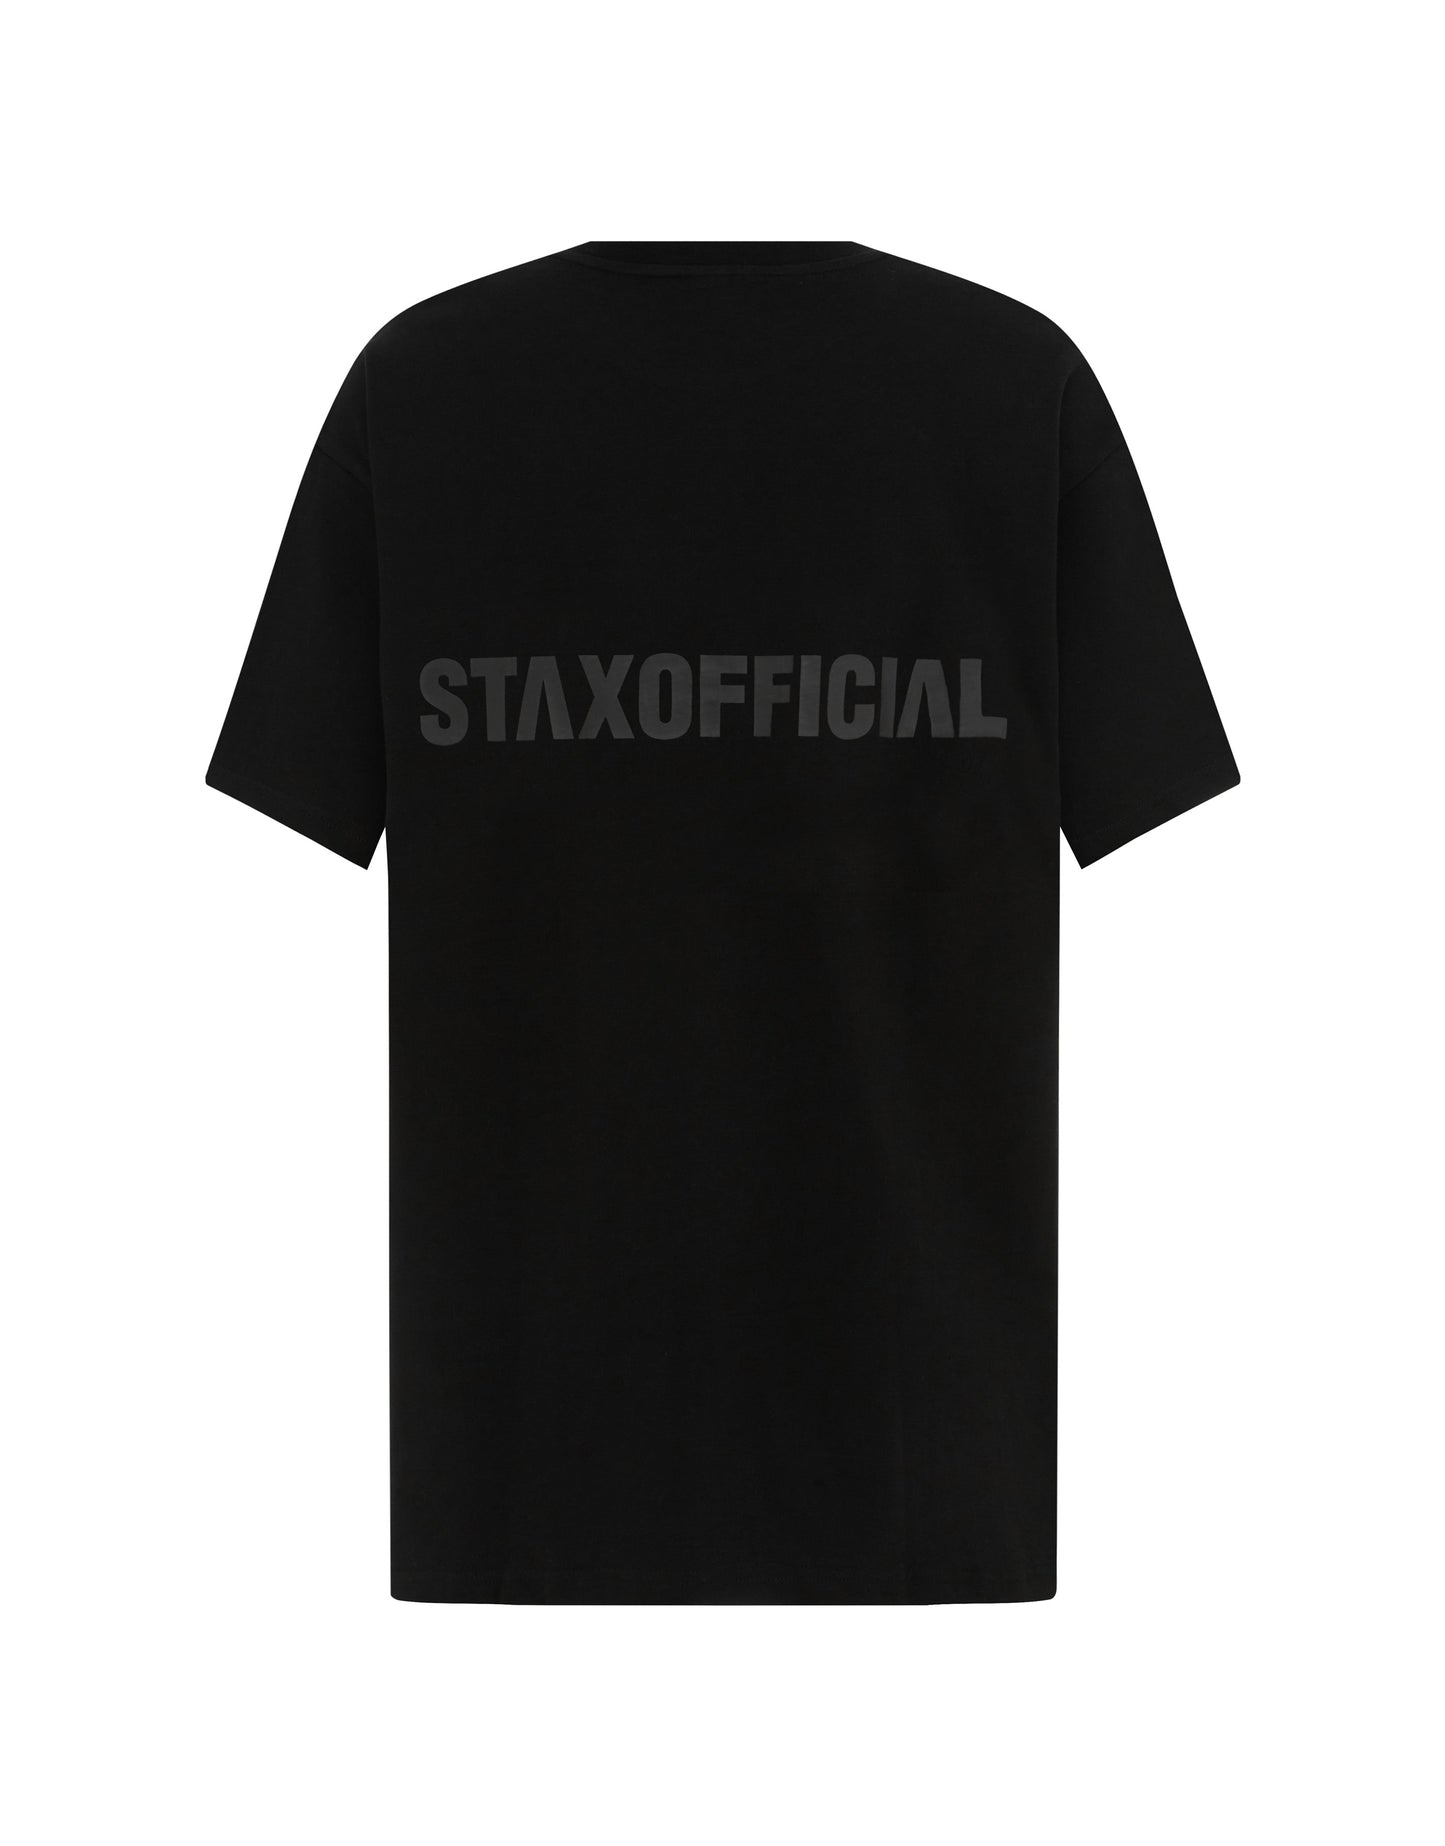 STAXOFFICIAL. Standard Fit Tee - Black/ Black Logo